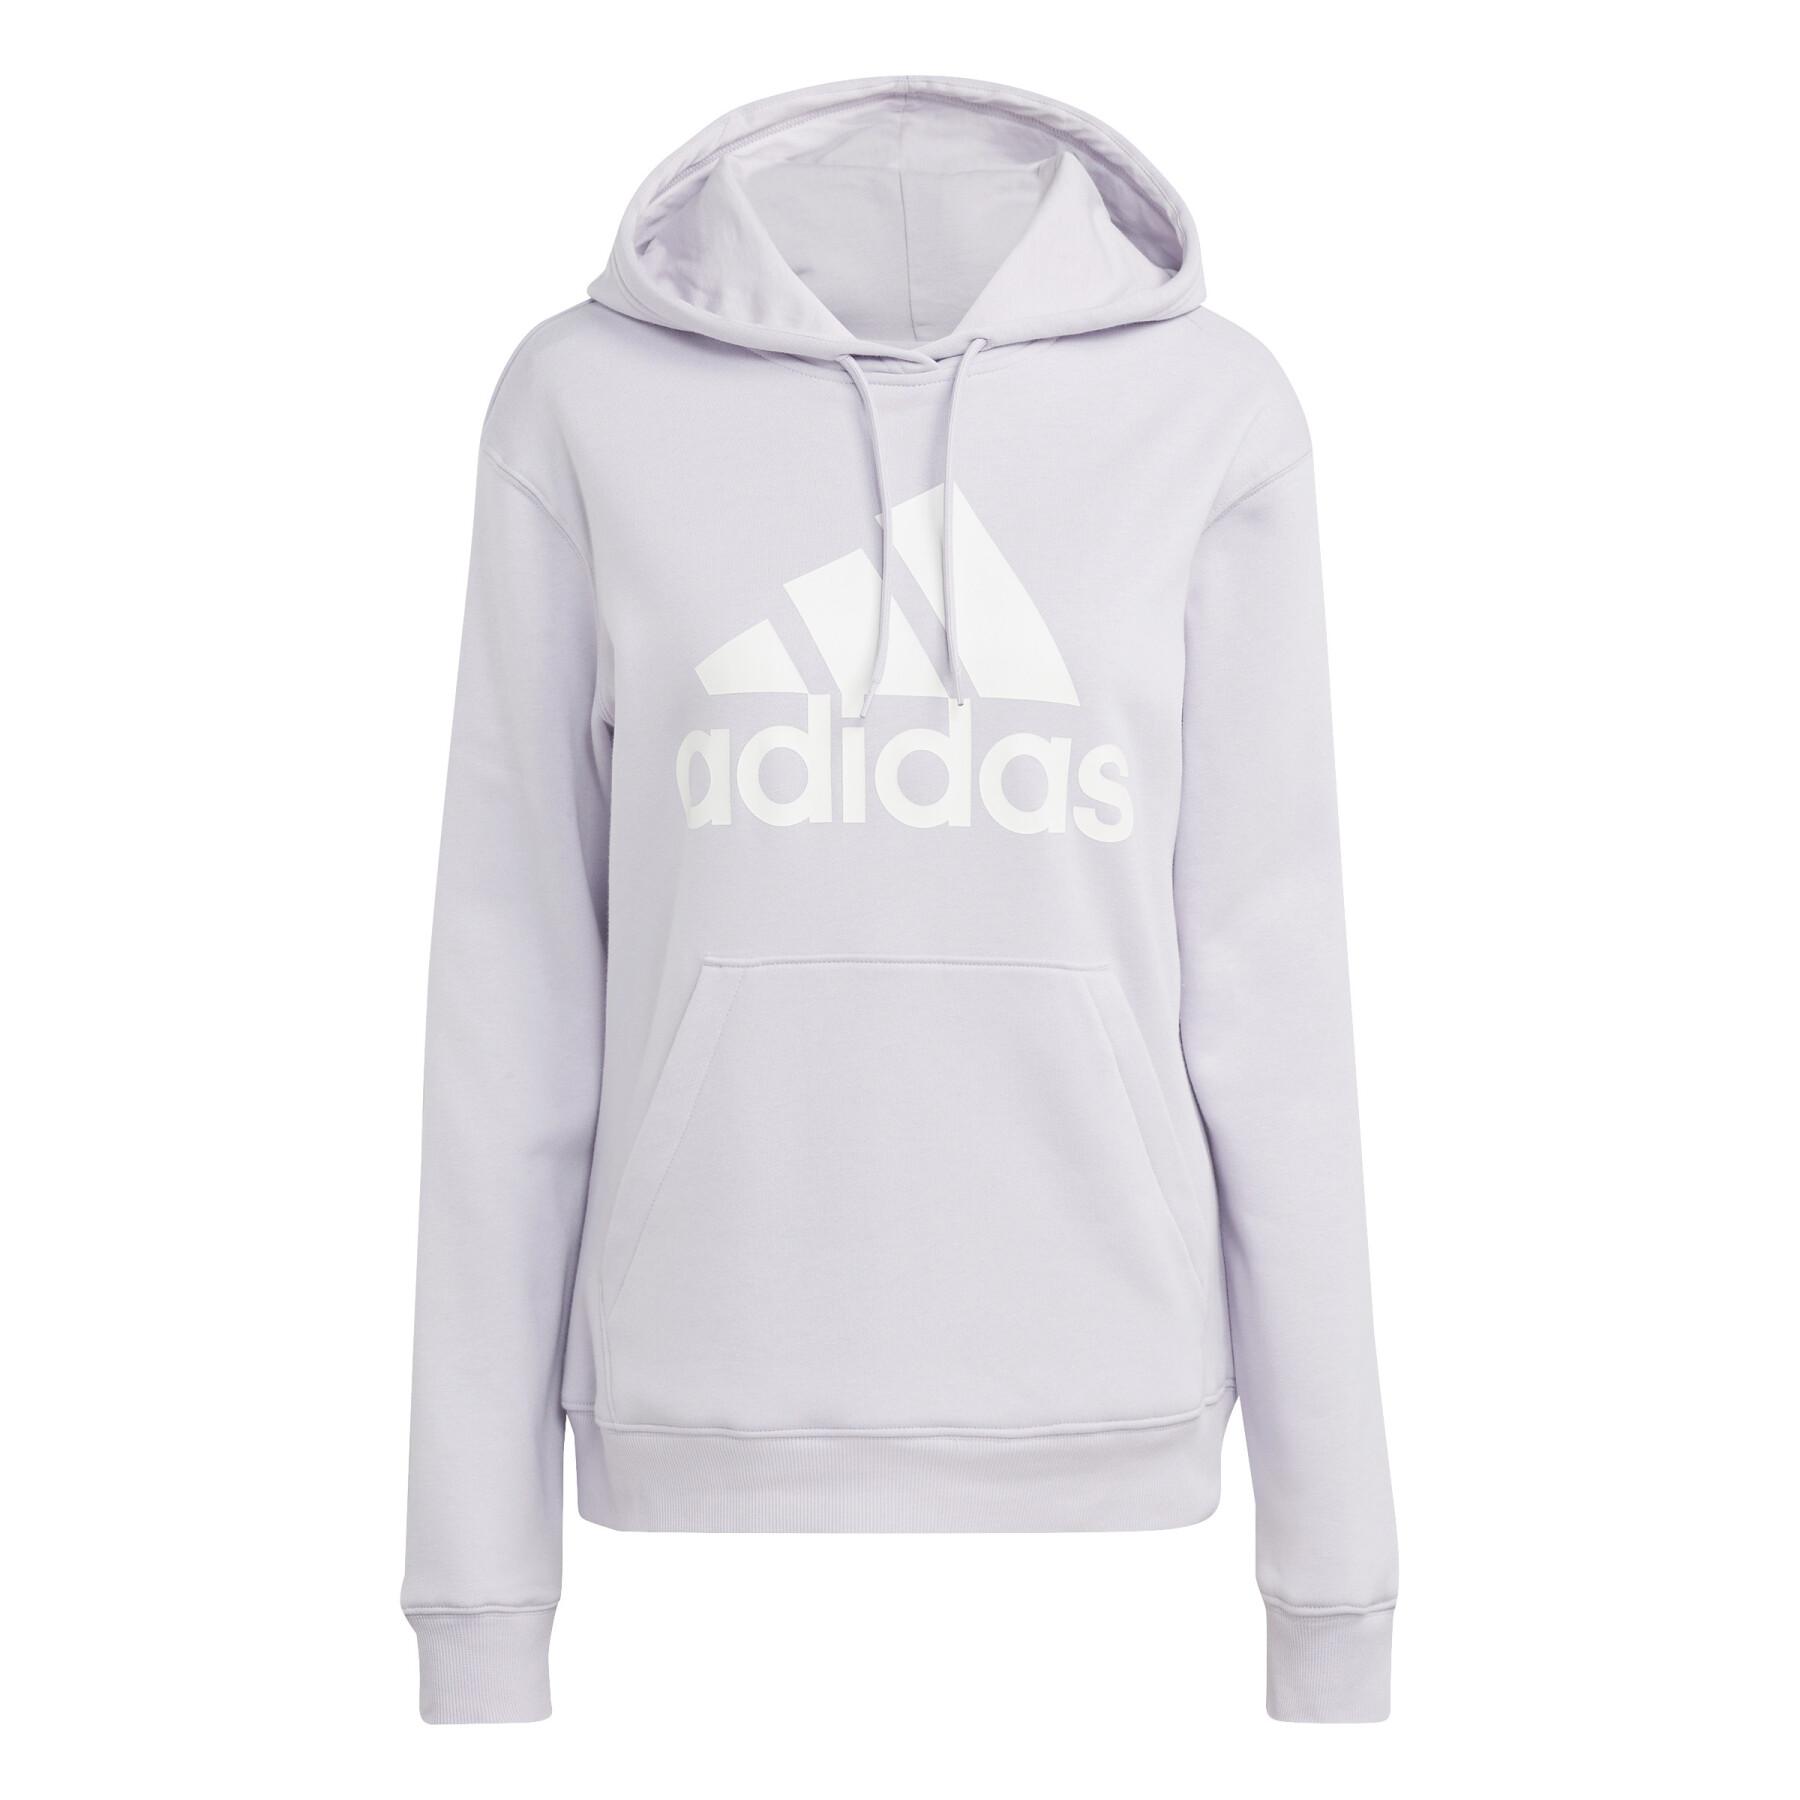 Sweatshirt regular hooded fleece woman adidas Essentials Big Logo - adidas  - Brands - Handball wear